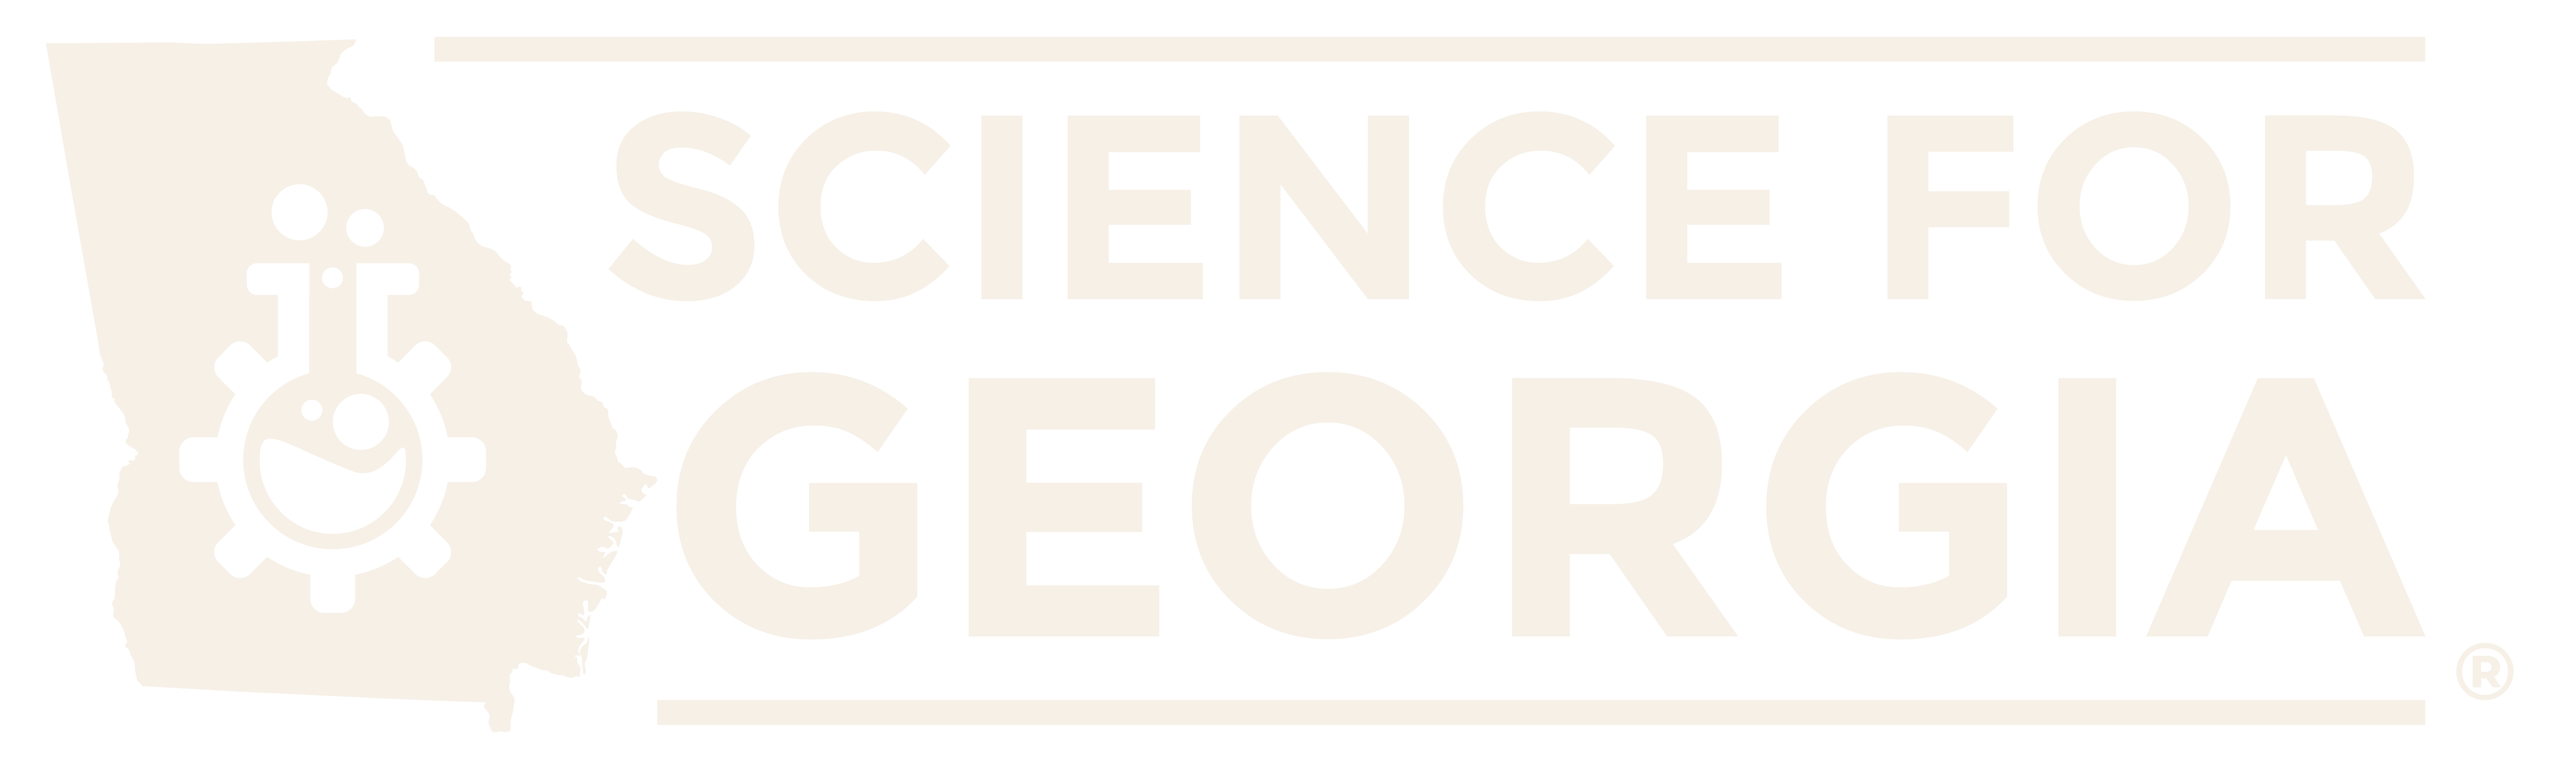 Science Lookup